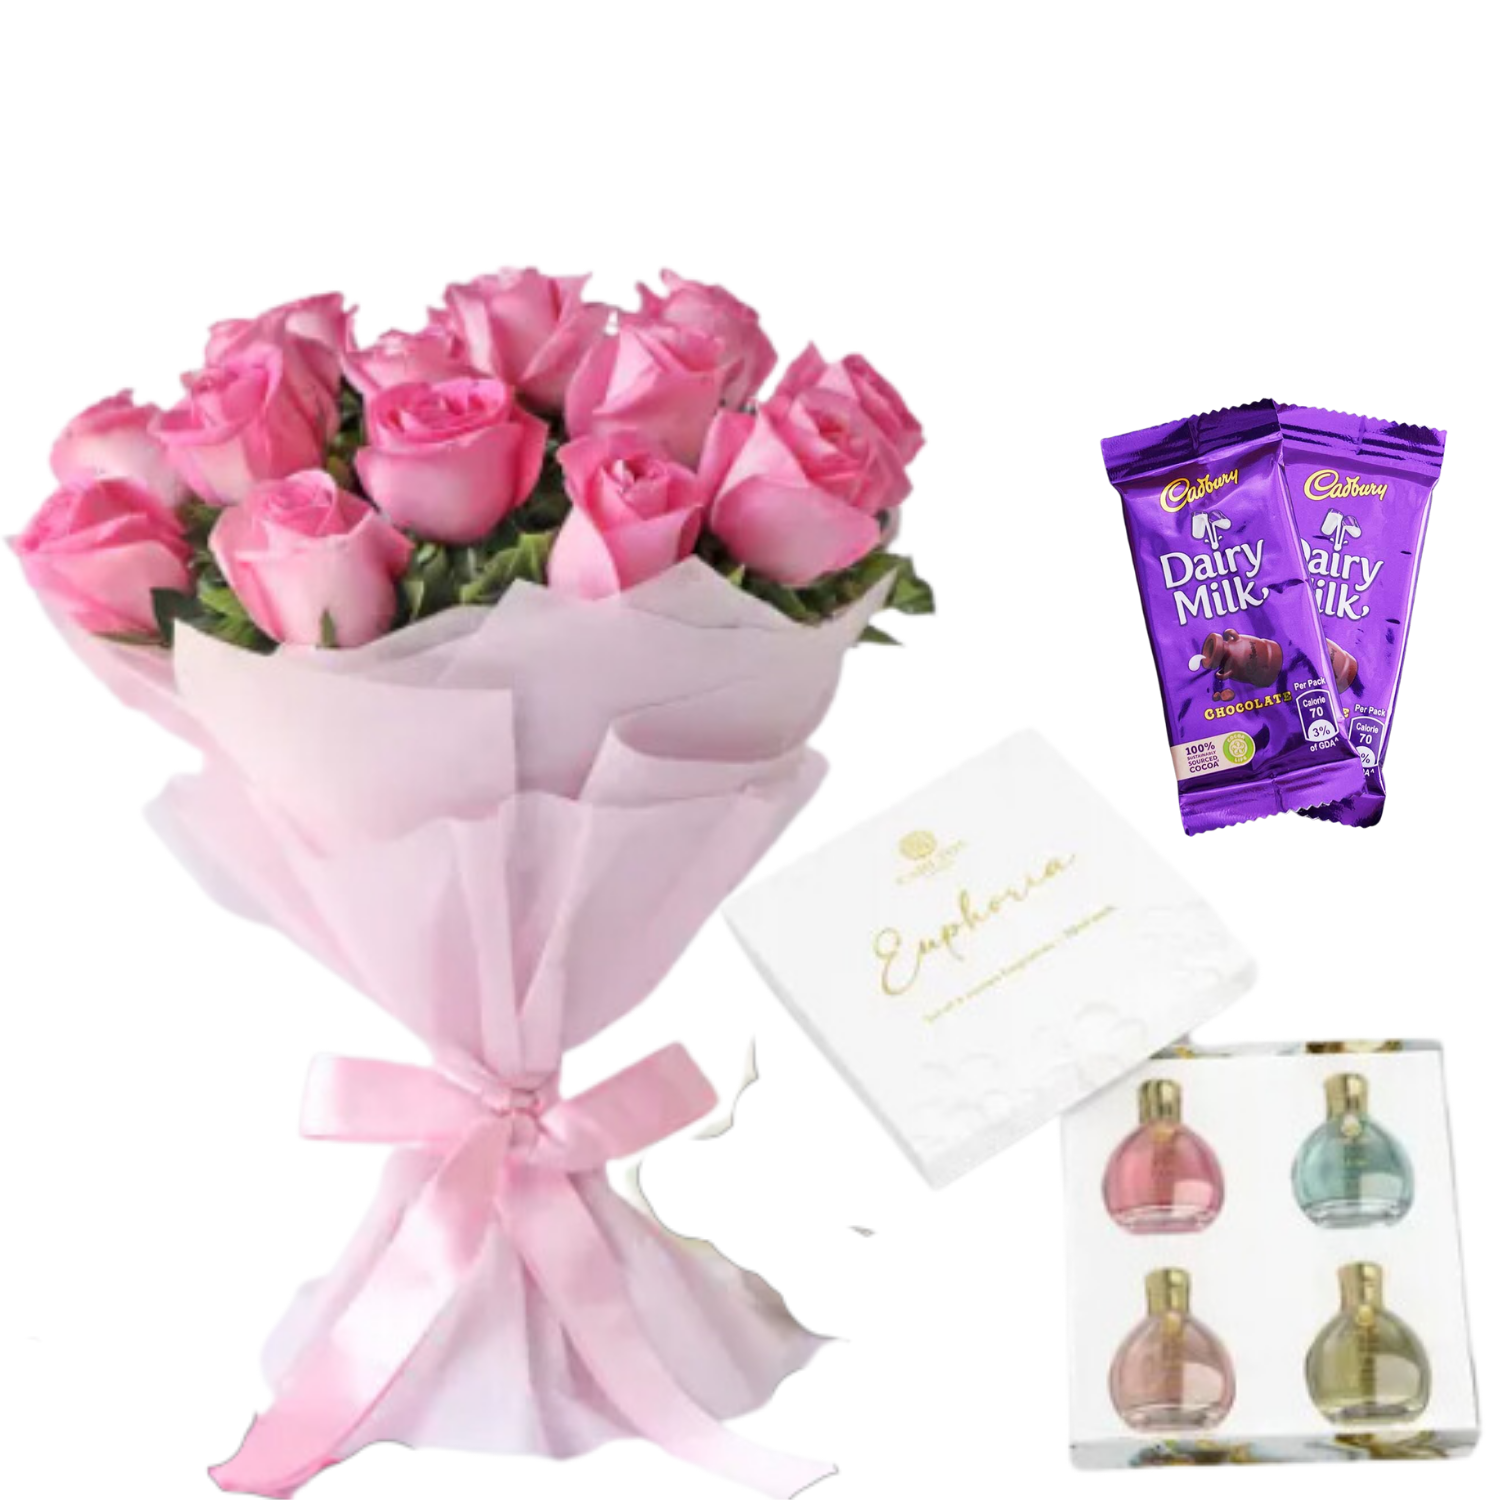 "Ultimate Women's Gift Set: 4 Perfumes, Roses, Chocolates"